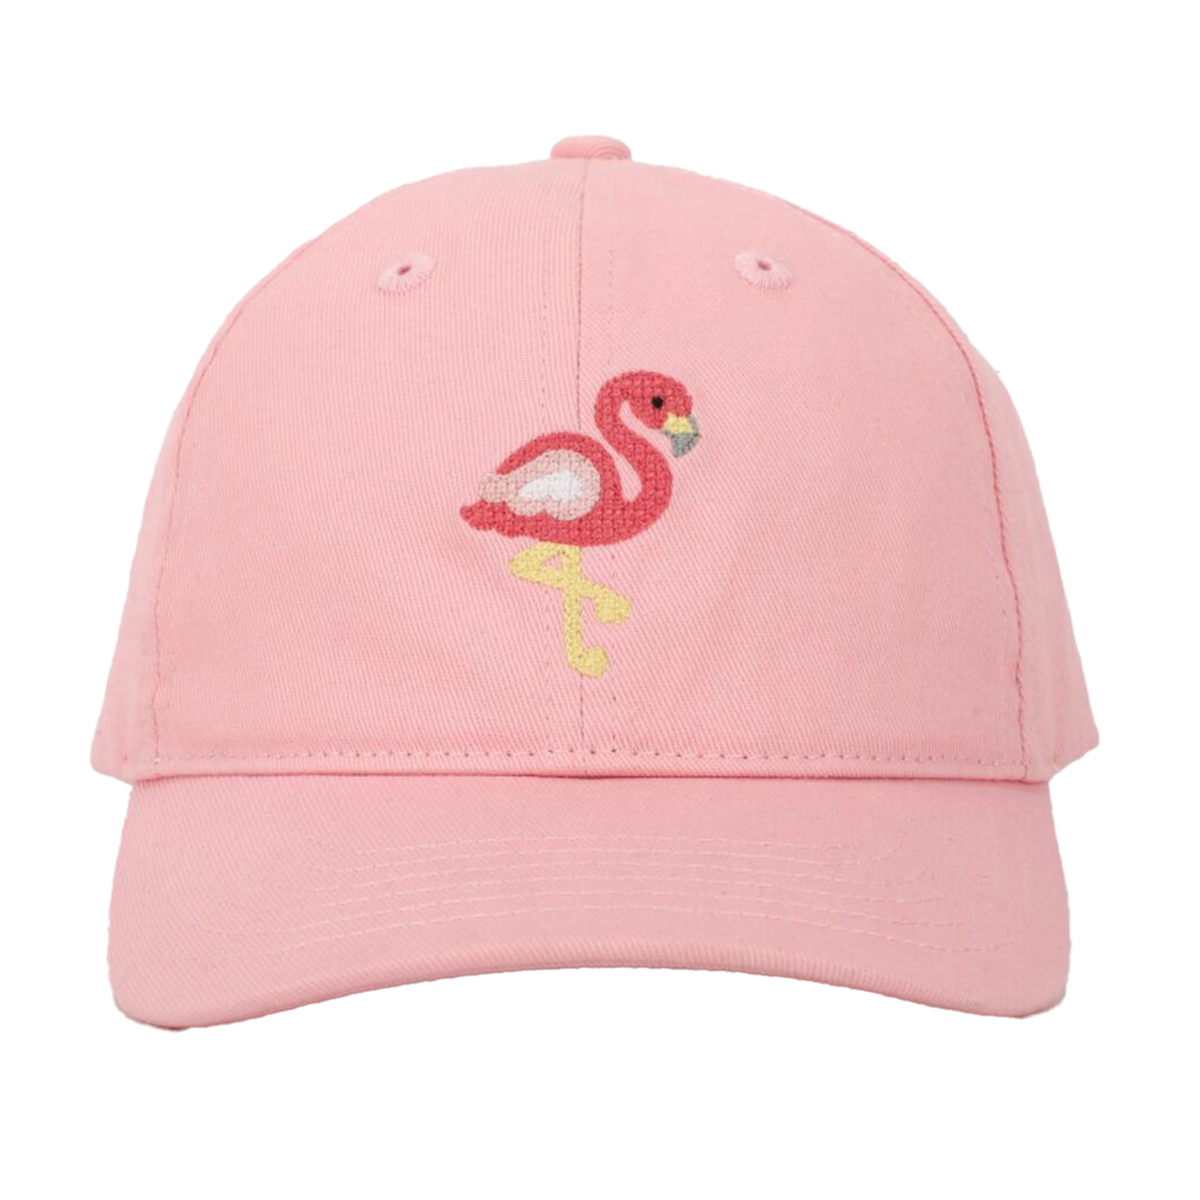 Flamingo on Pink Little Kideauxs Child's Baseball Cap